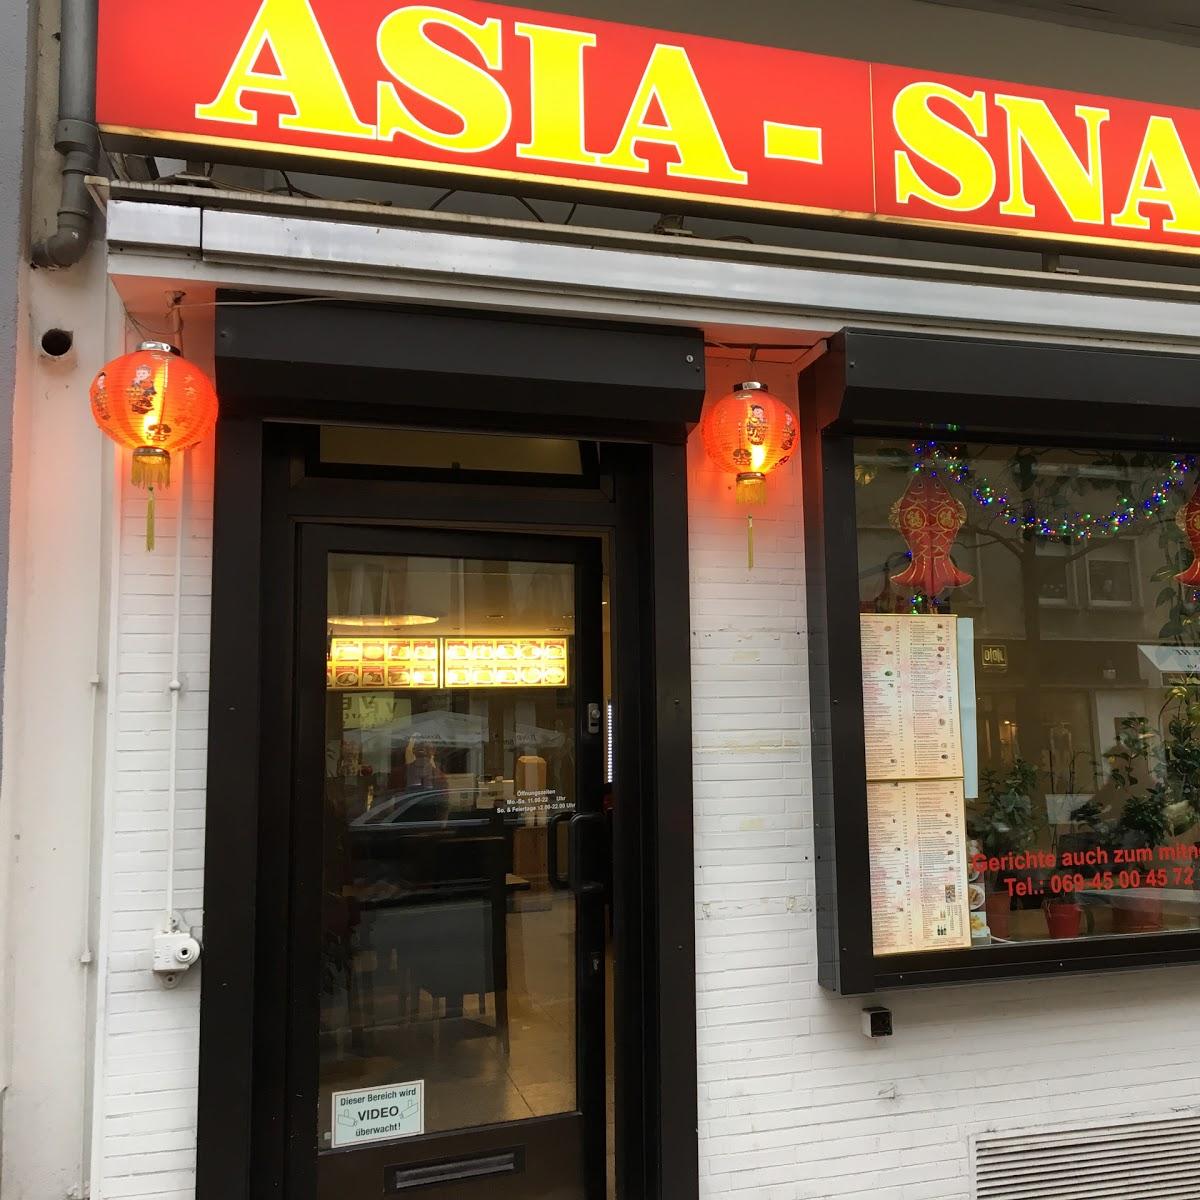 Restaurant "Asia-Snack" in Frankfurt am Main